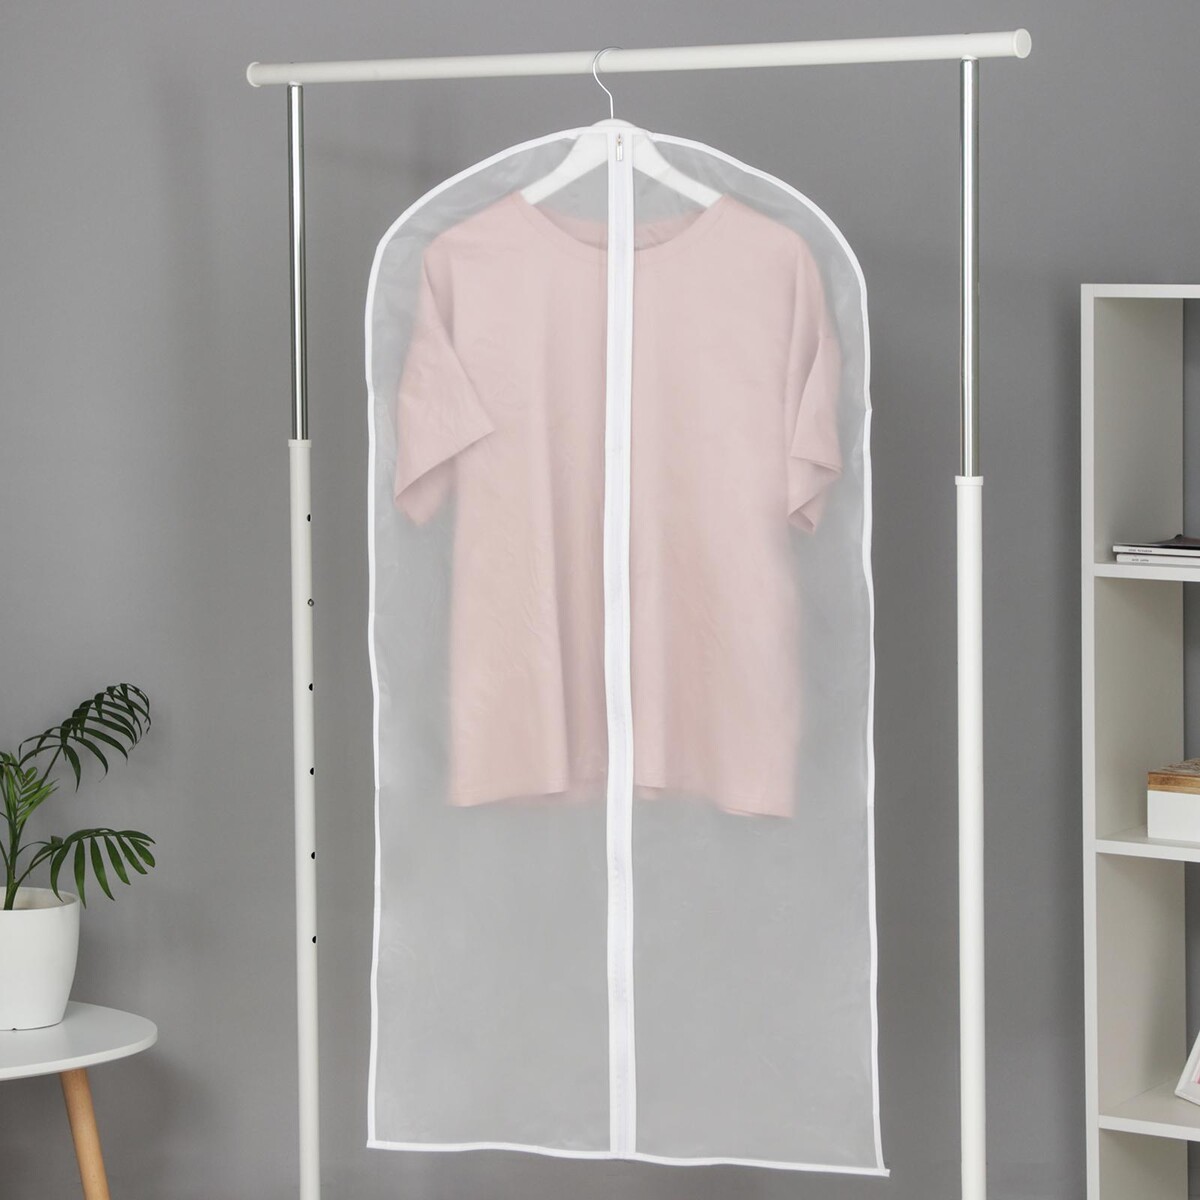 Чехол для одежды плотный доляна, 60×120 см, peva, цвет белый чехол для одежды ladо́m 60×137 см плотный peva серый